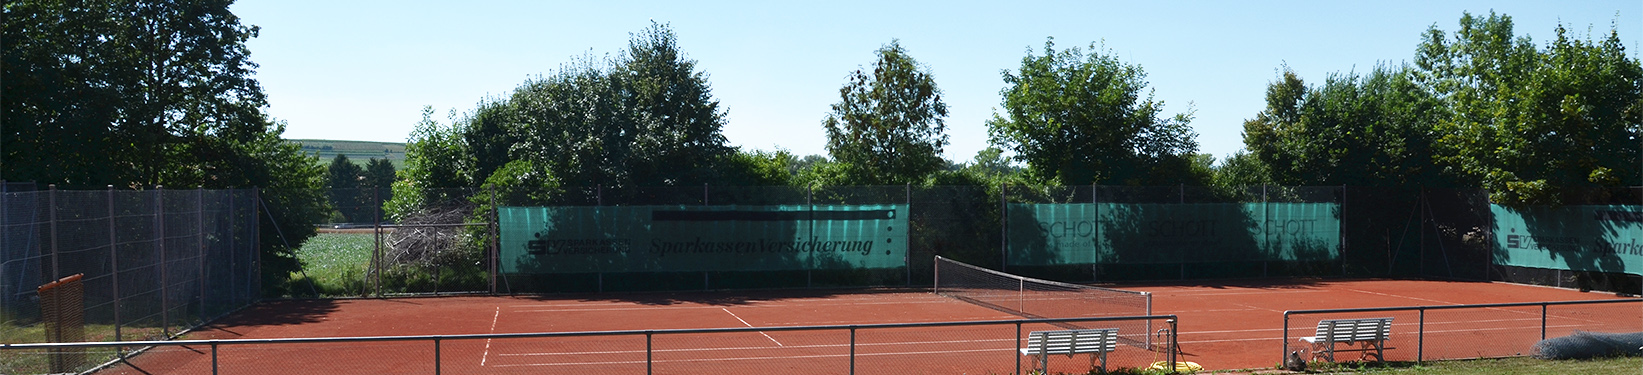 Tennisplatz Platz 3